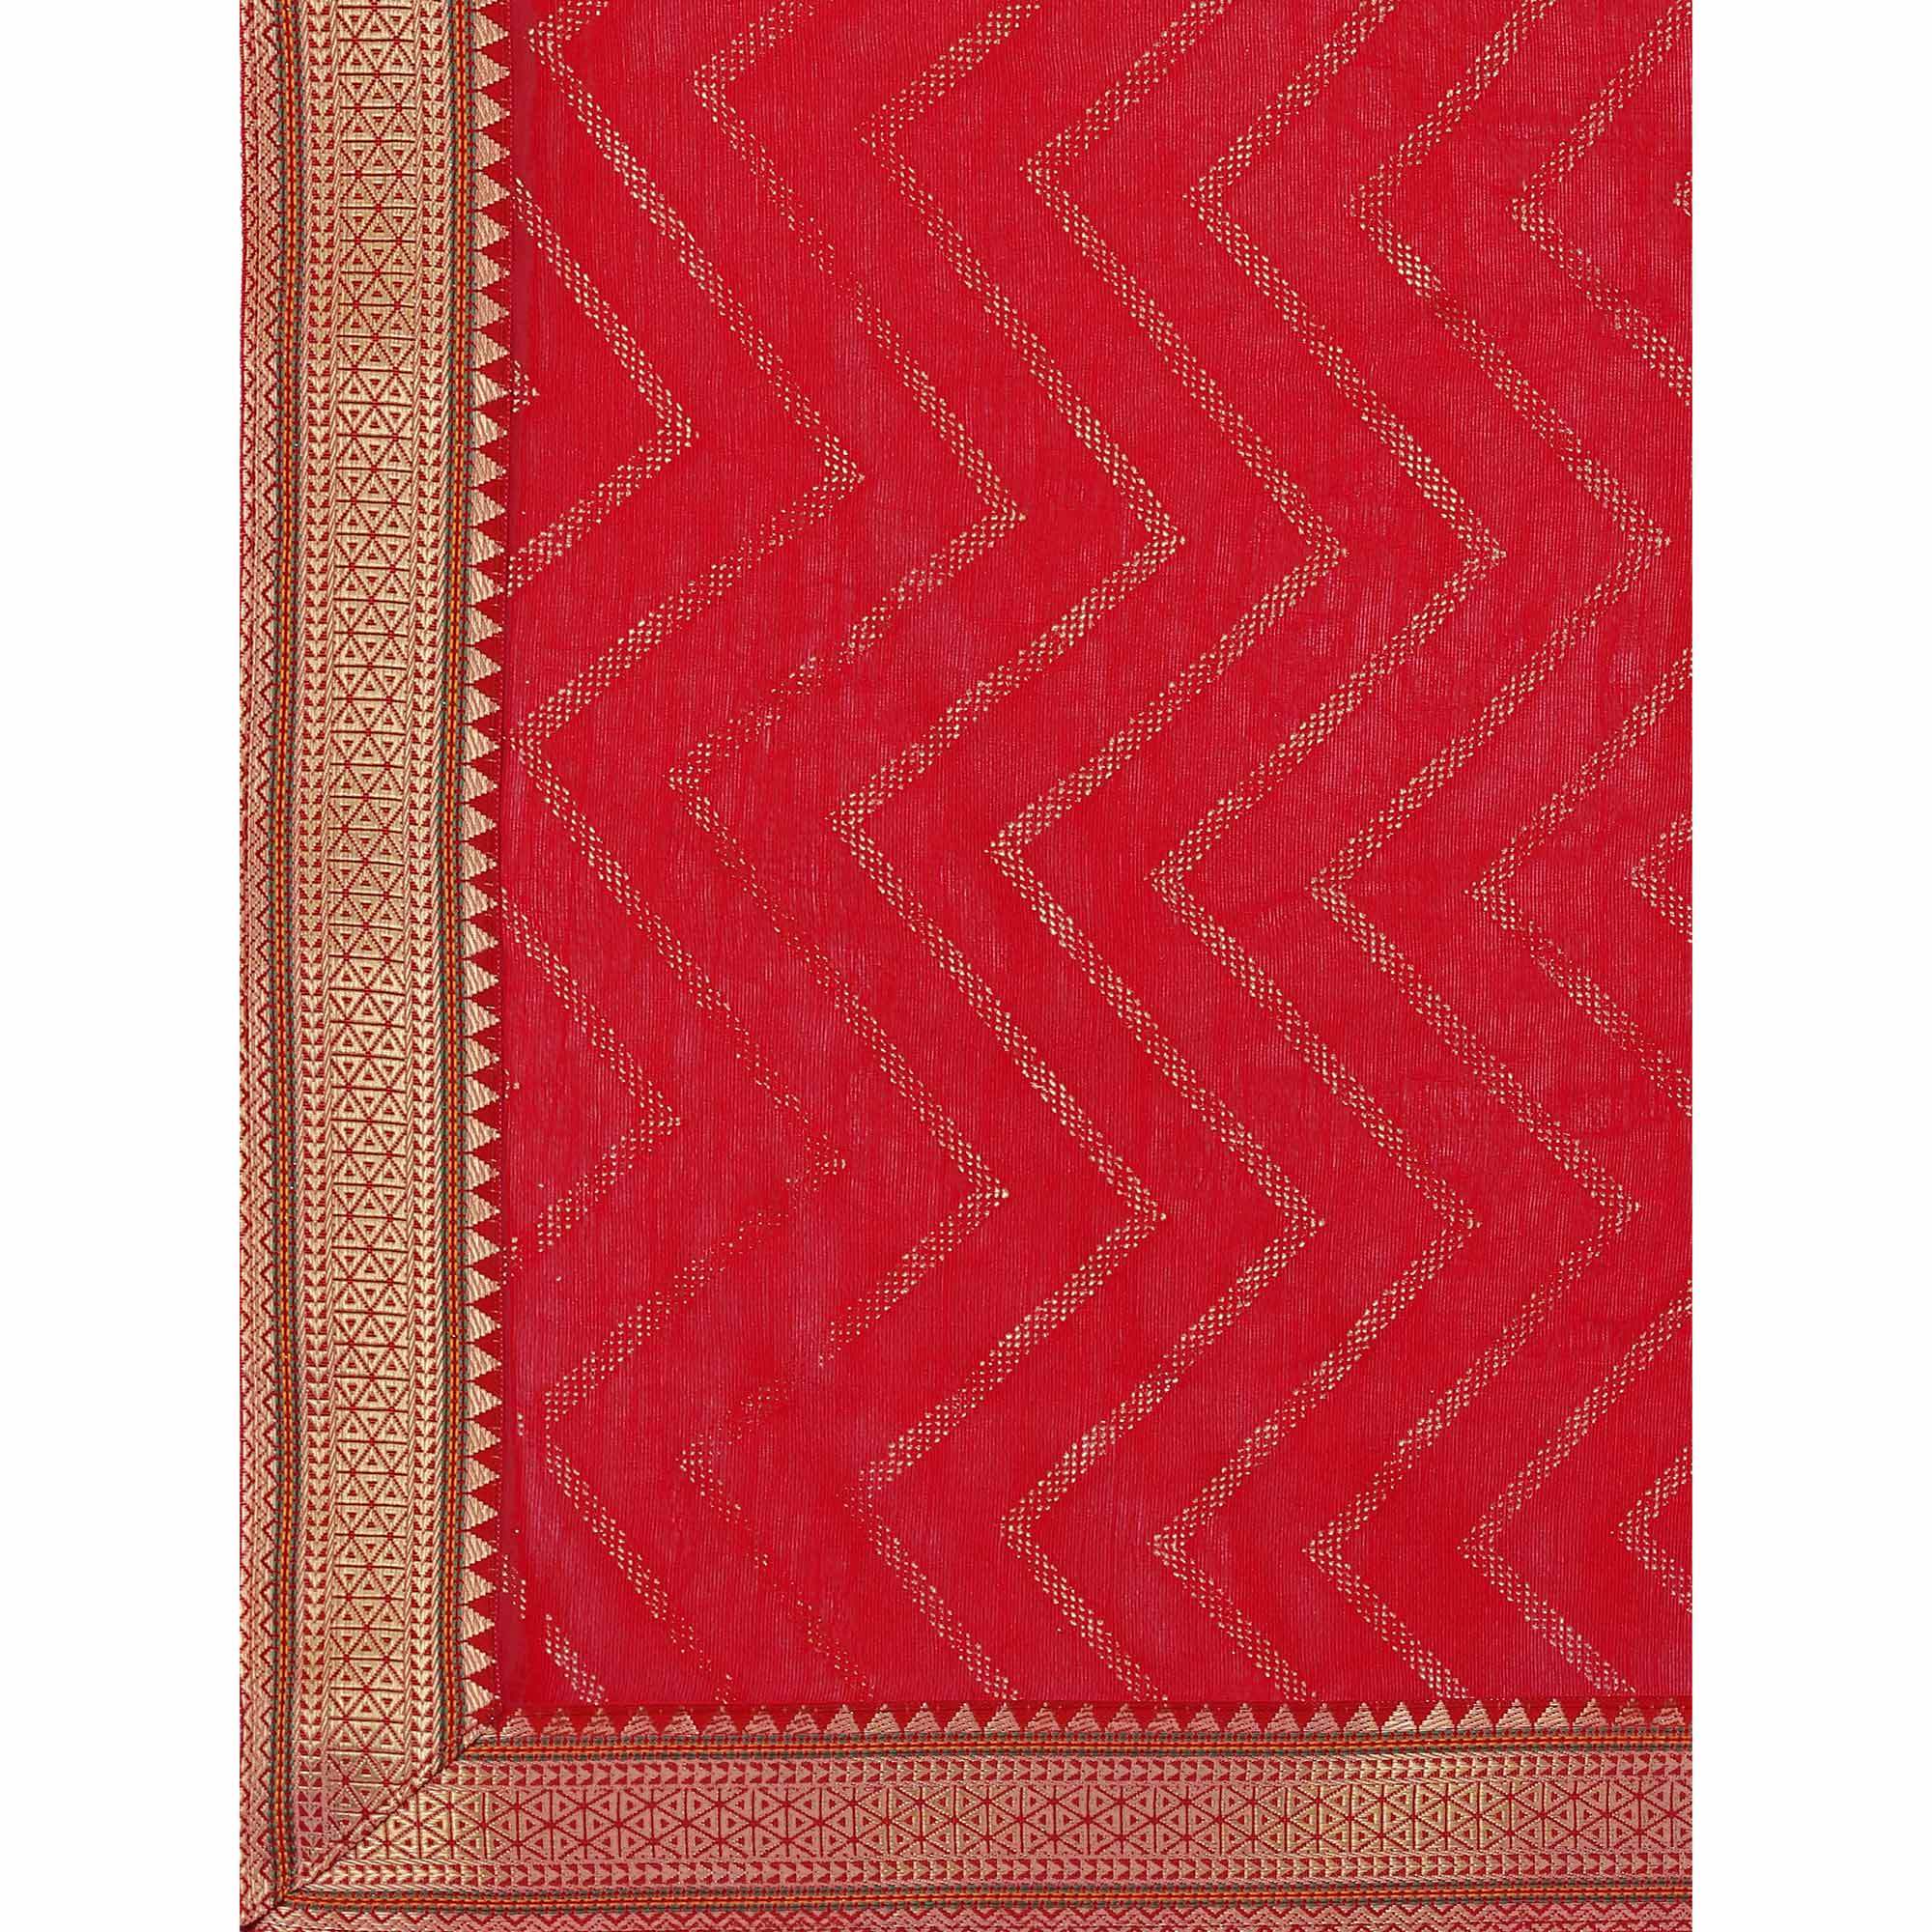 Maroon Foil Printed Chiffon Saree With Lace Border